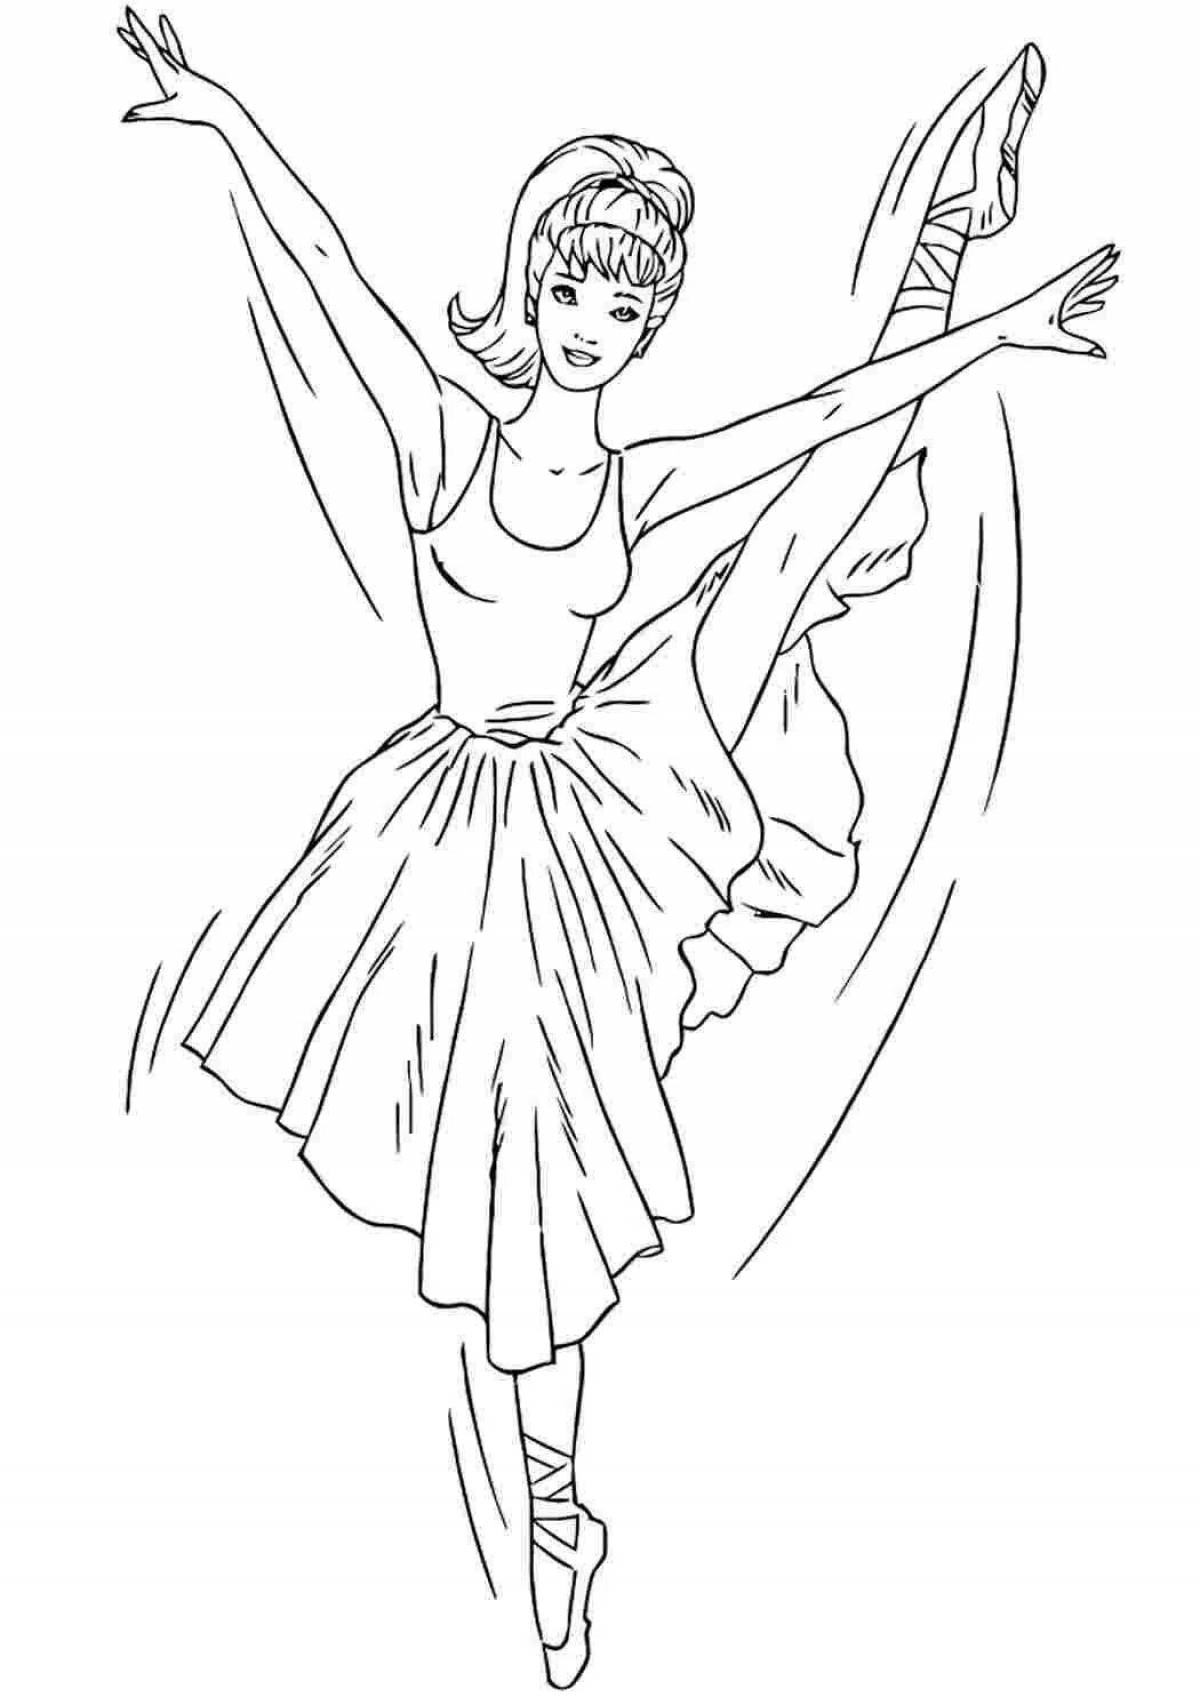 Coloring page joyful dancer